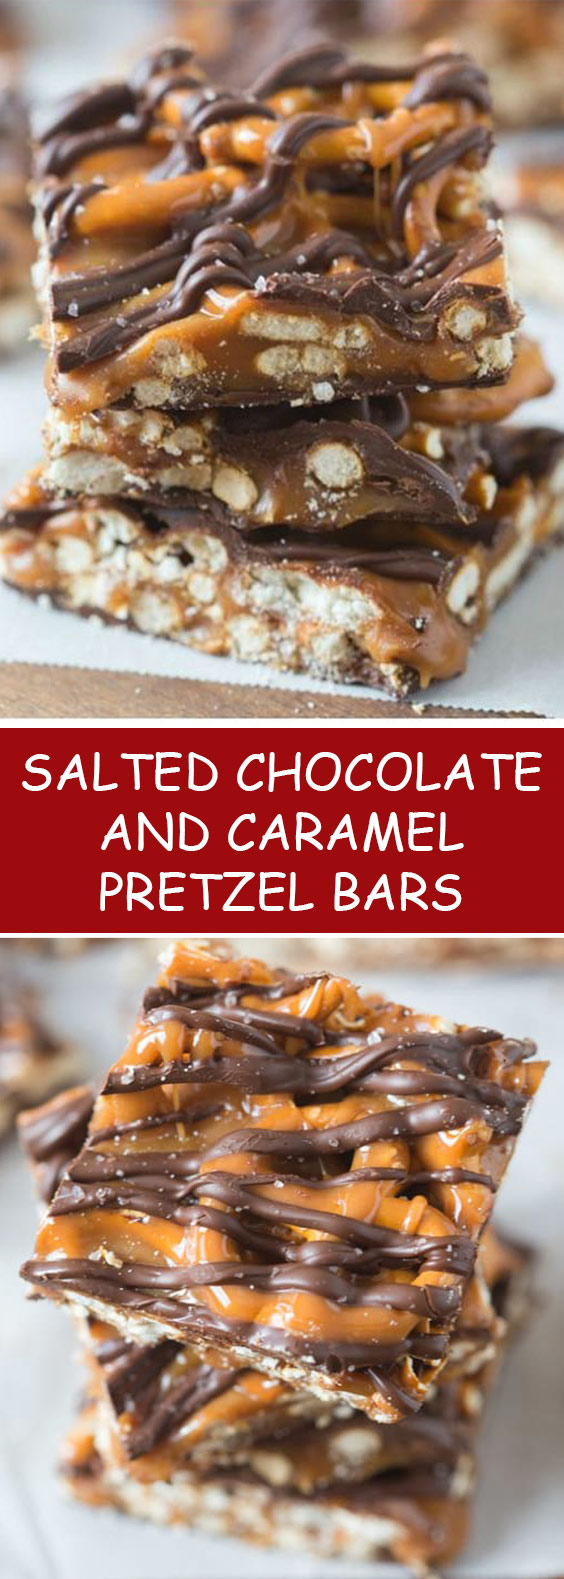 Salted Chocolate and Caramel Pretzel Bars